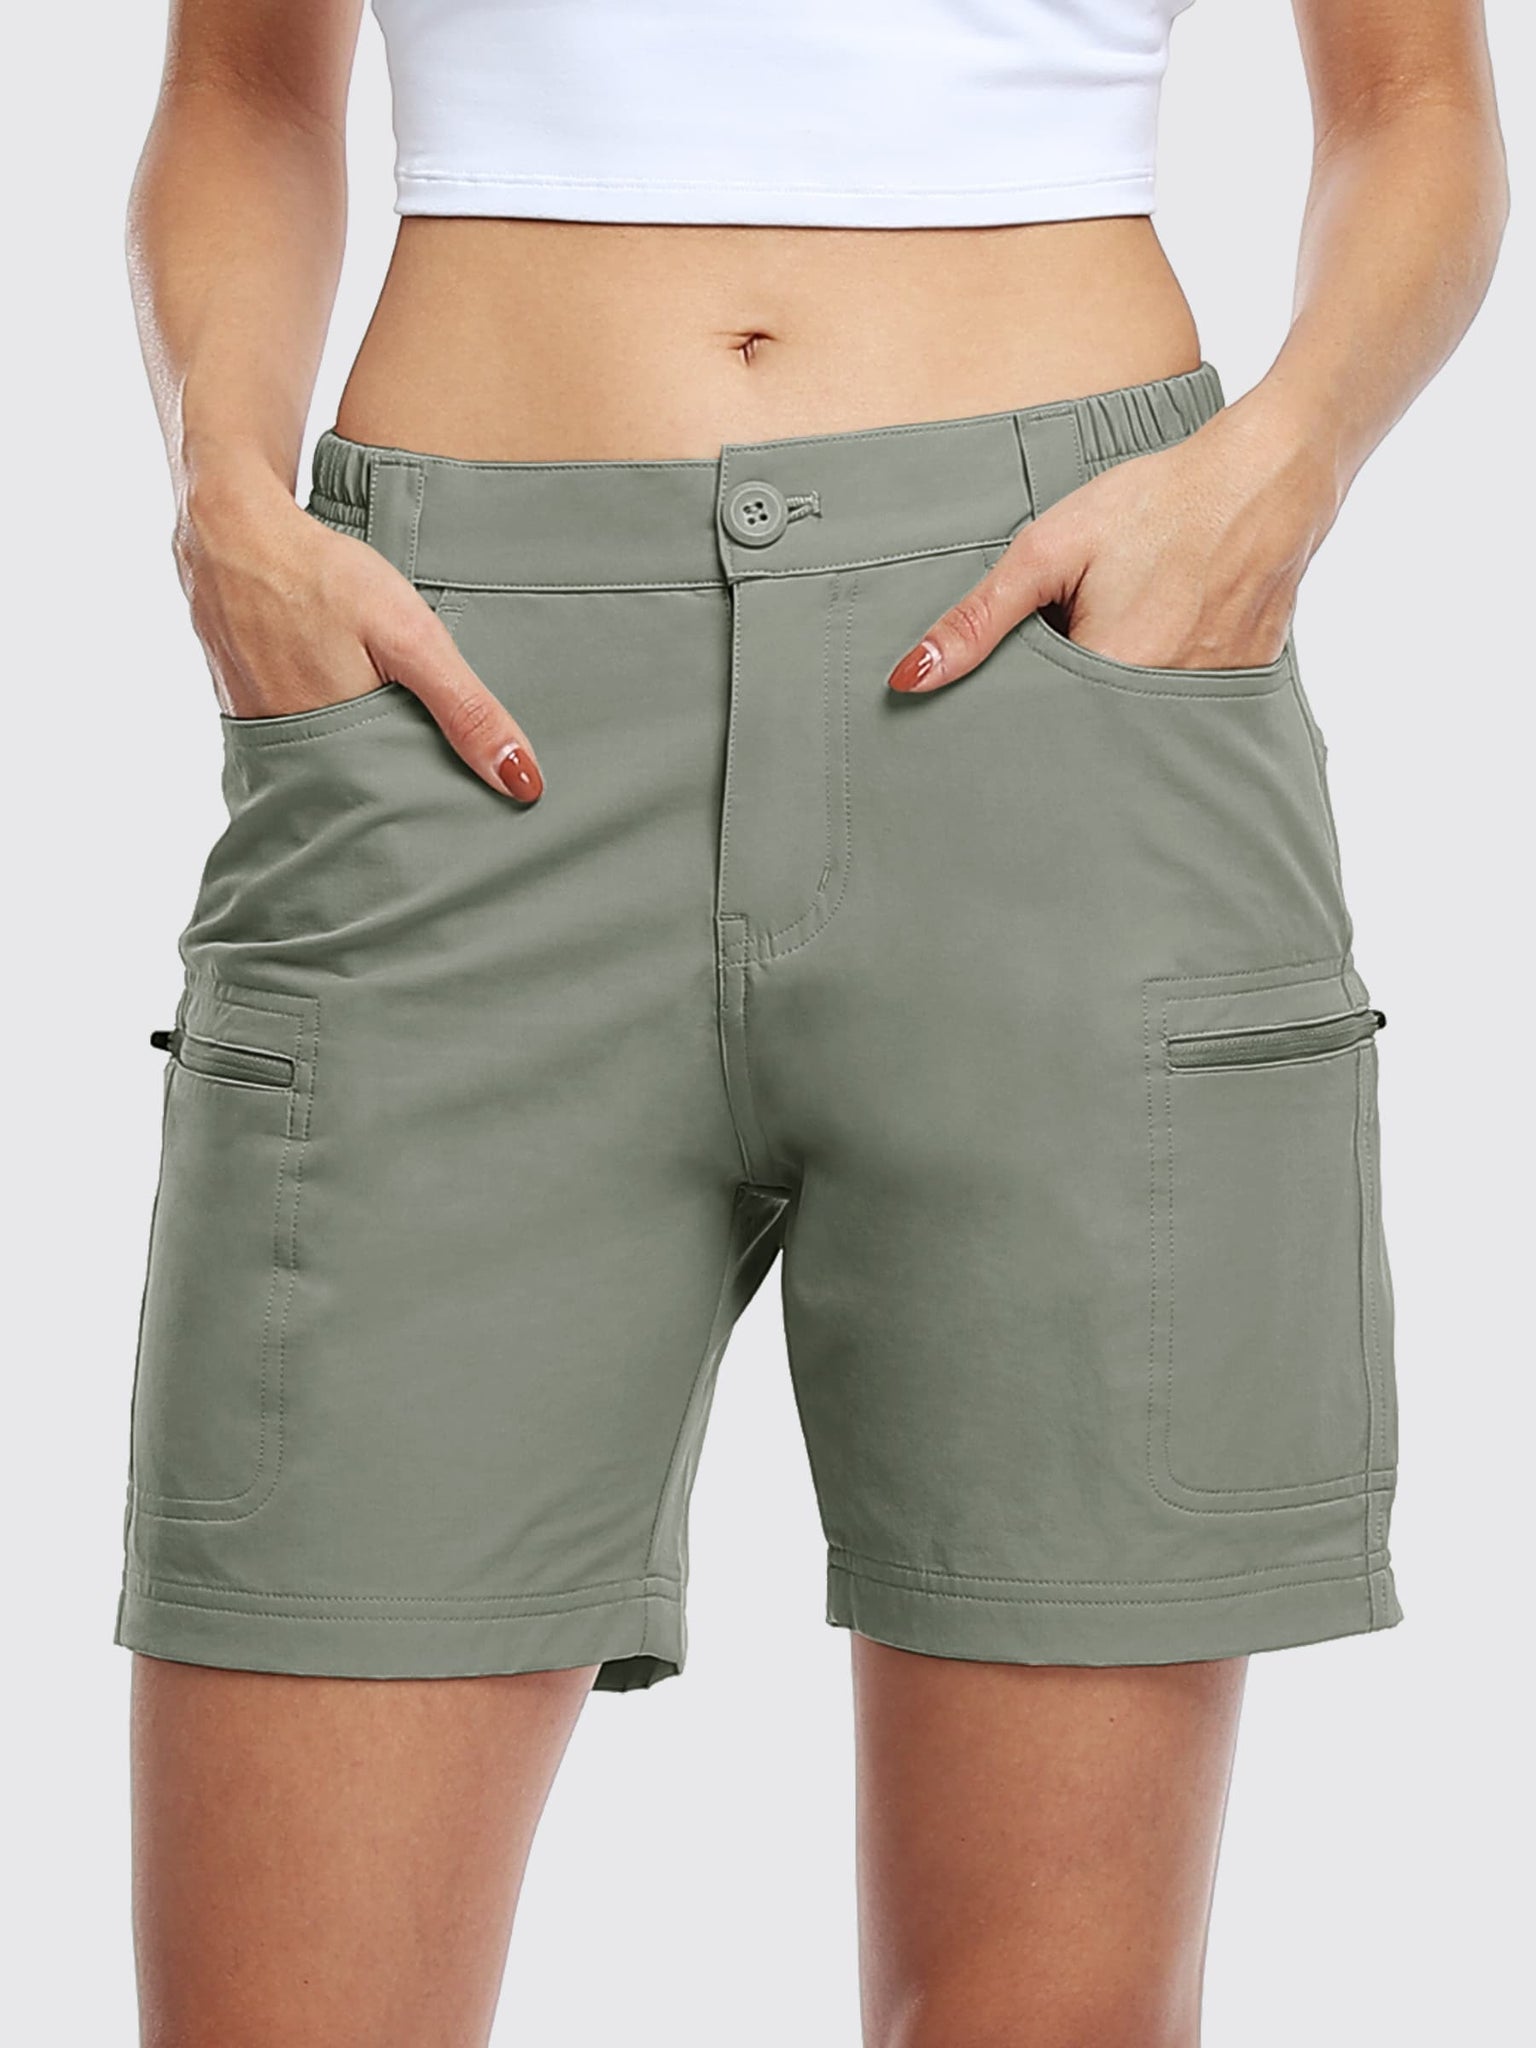 Willit Women's Outdoor Cargo Shorts 6 Inseam_Green_model1